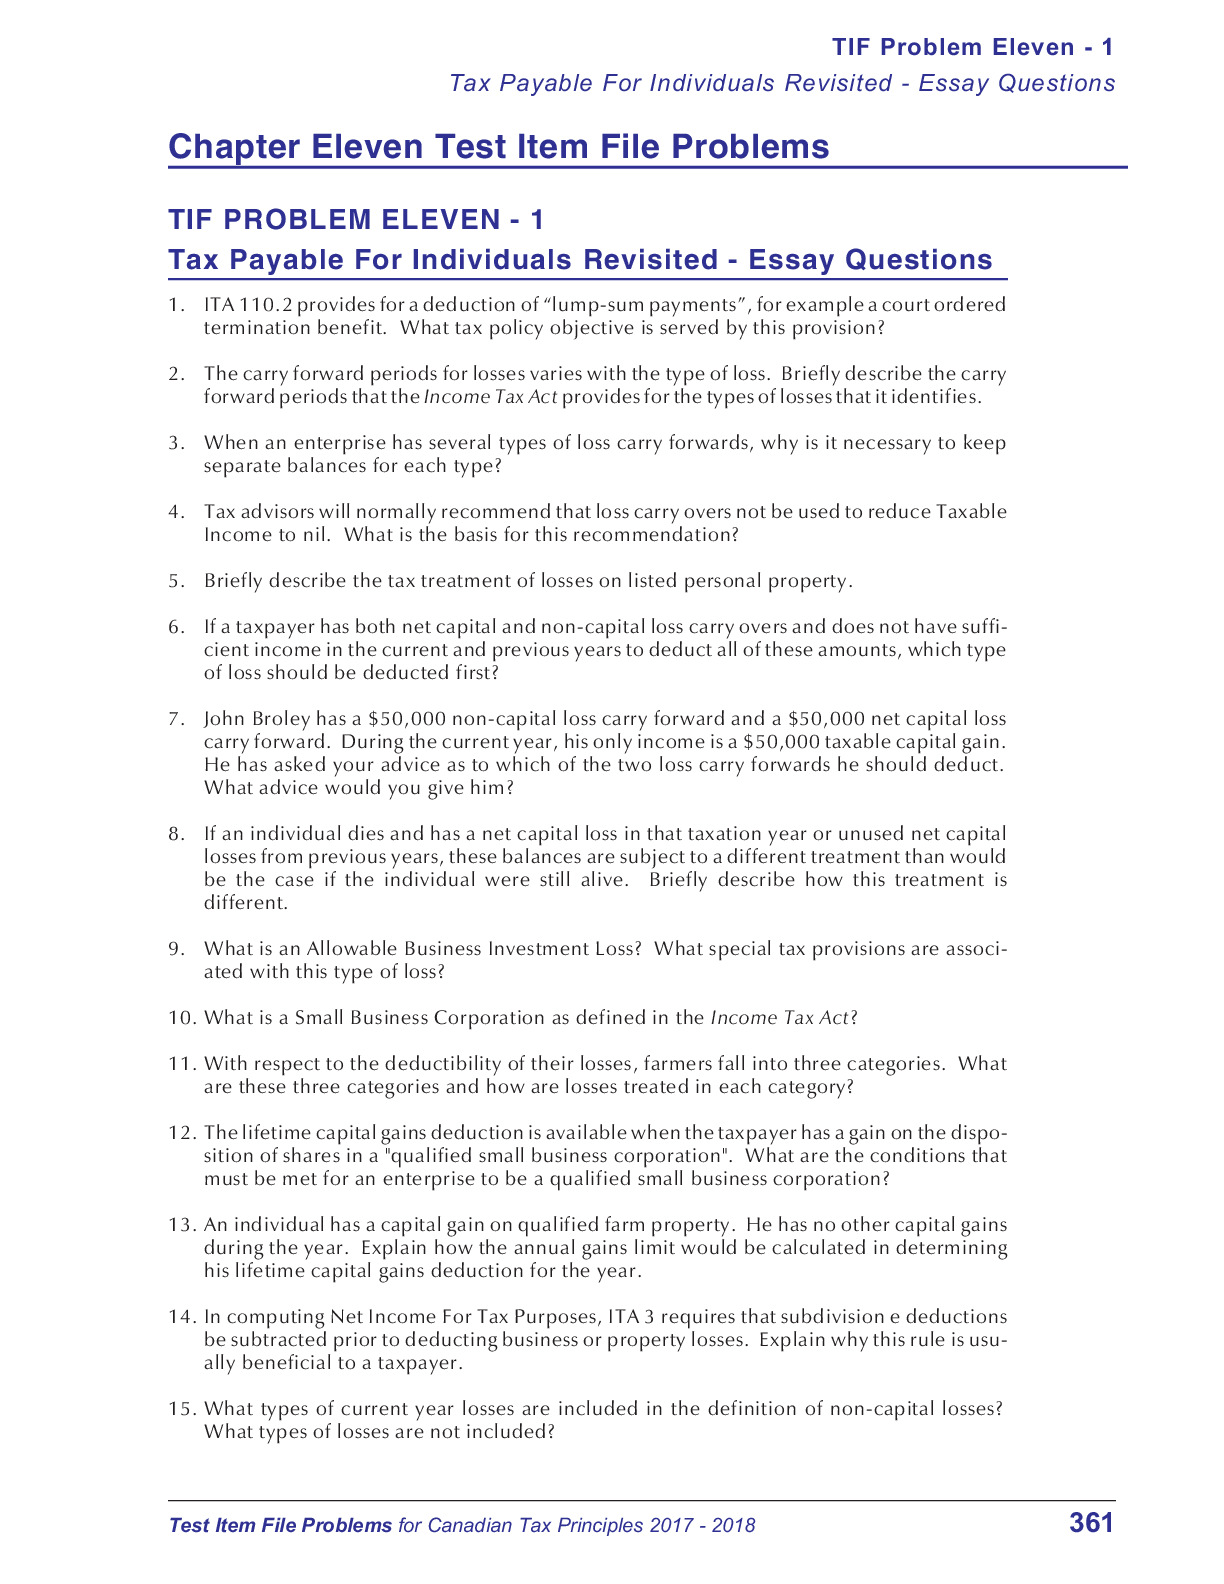 TIF_Problems_Chapters_11_21_2017.pdf